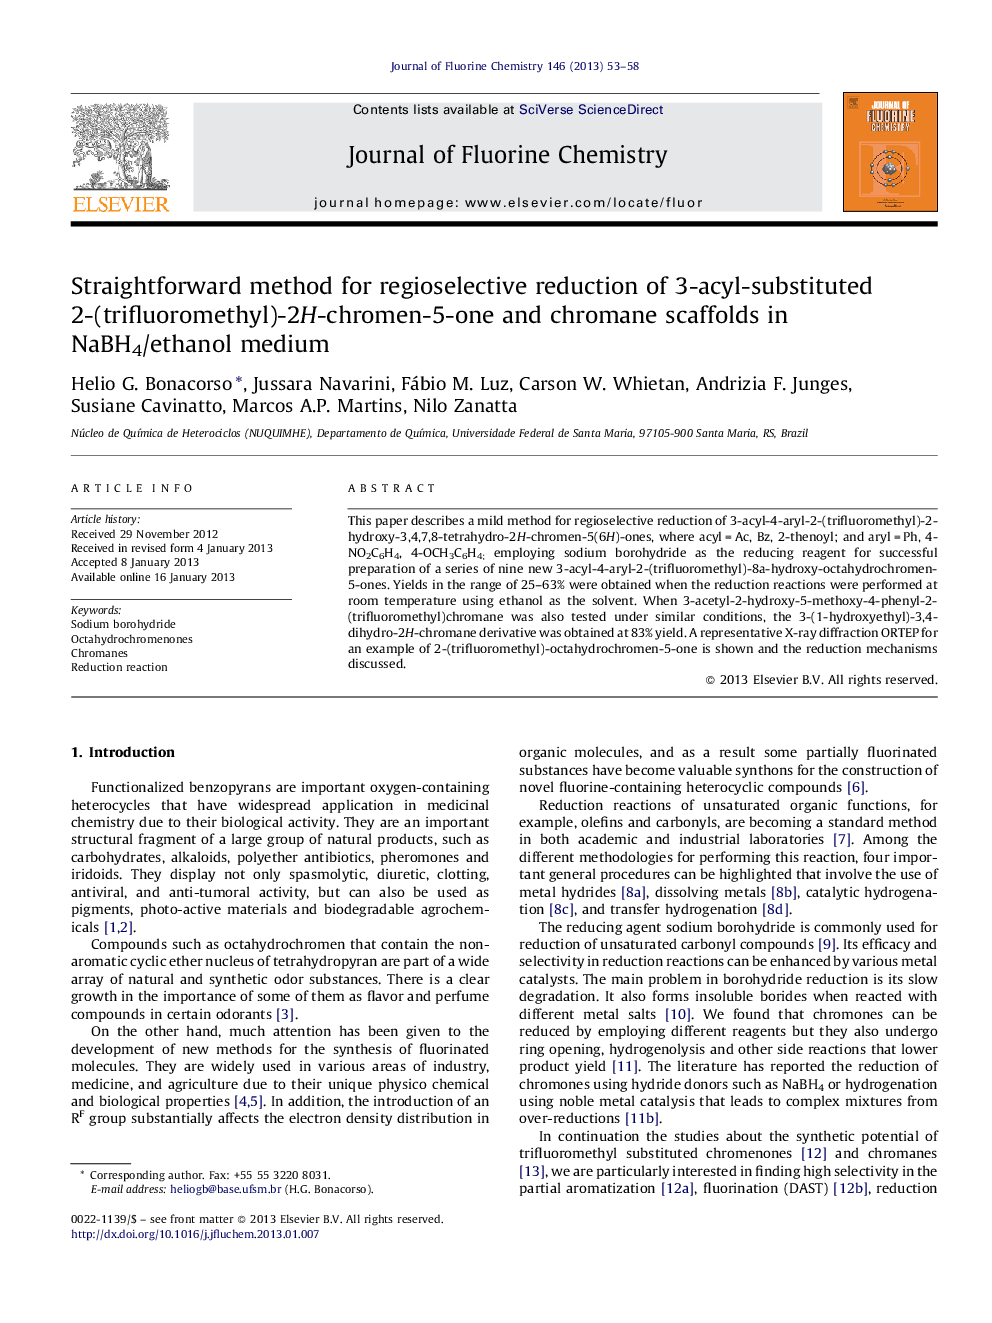 Straightforward method for regioselective reduction of 3-acyl-substituted 2-(trifluoromethyl)-2H-chromen-5-one and chromane scaffolds in NaBH4/ethanol medium